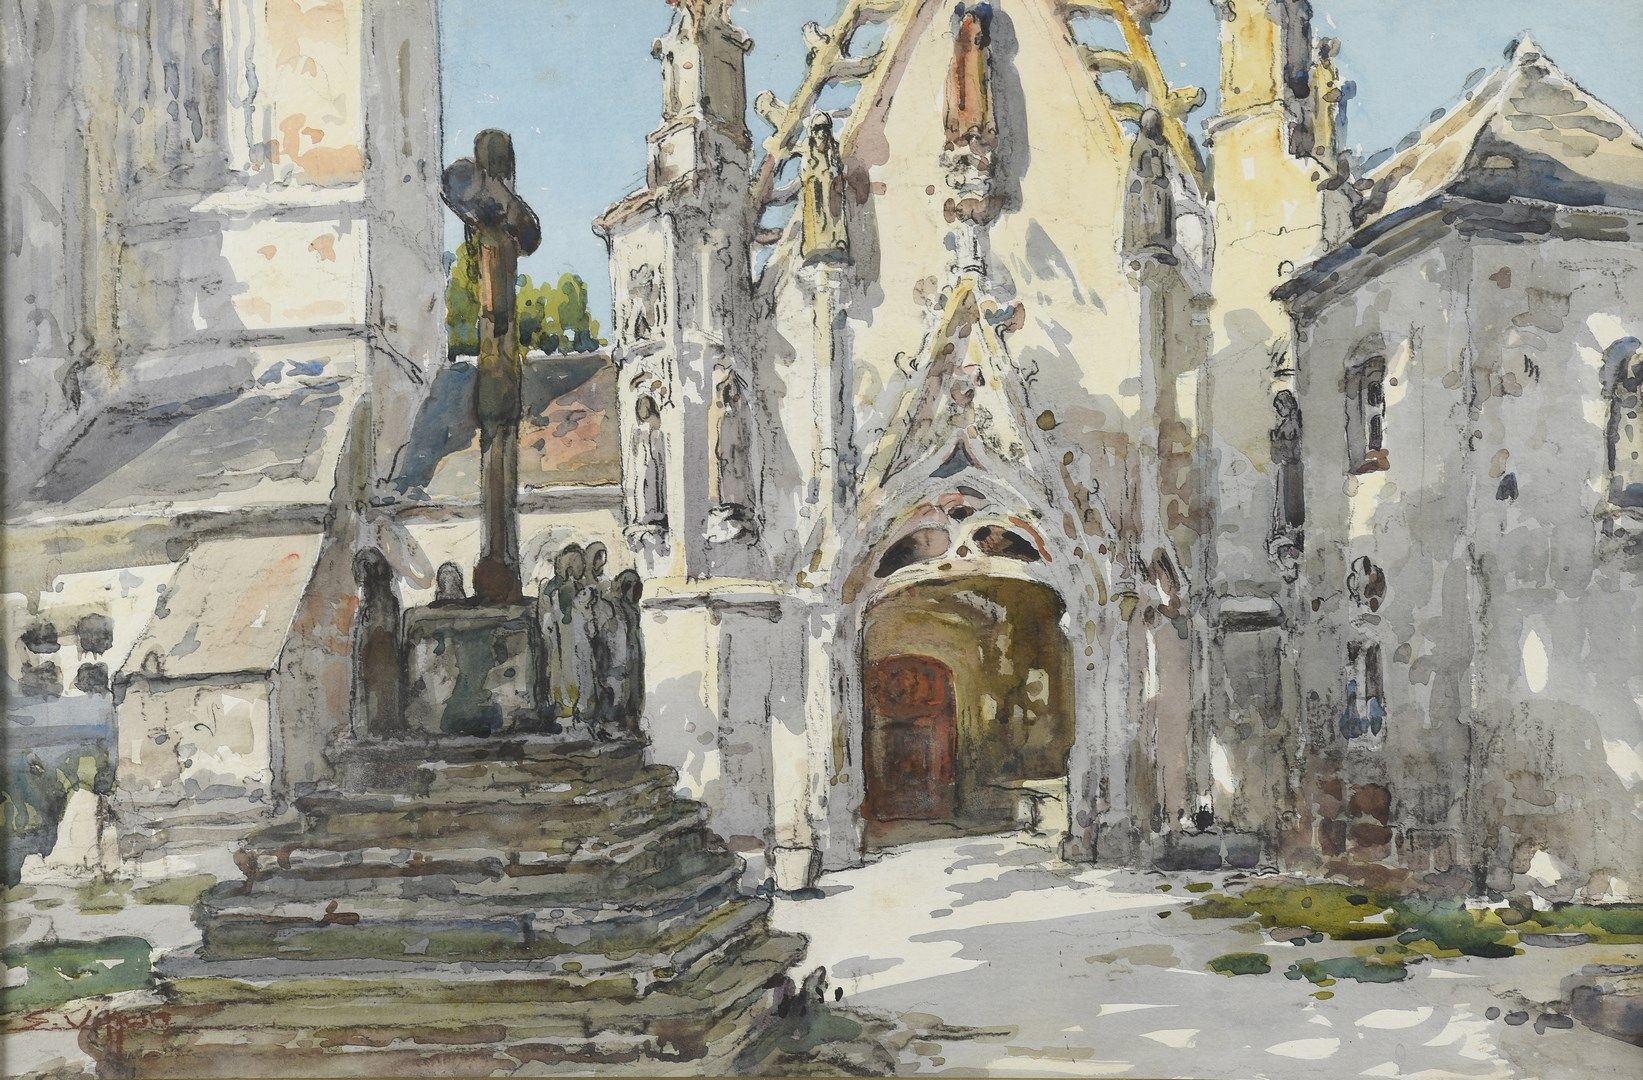 Null 维龙-尤金，1879-1951年

Thegonnec, 布列塔尼小教堂

水彩画和水粉画

左下角有签名

36 x 55 cm at sight